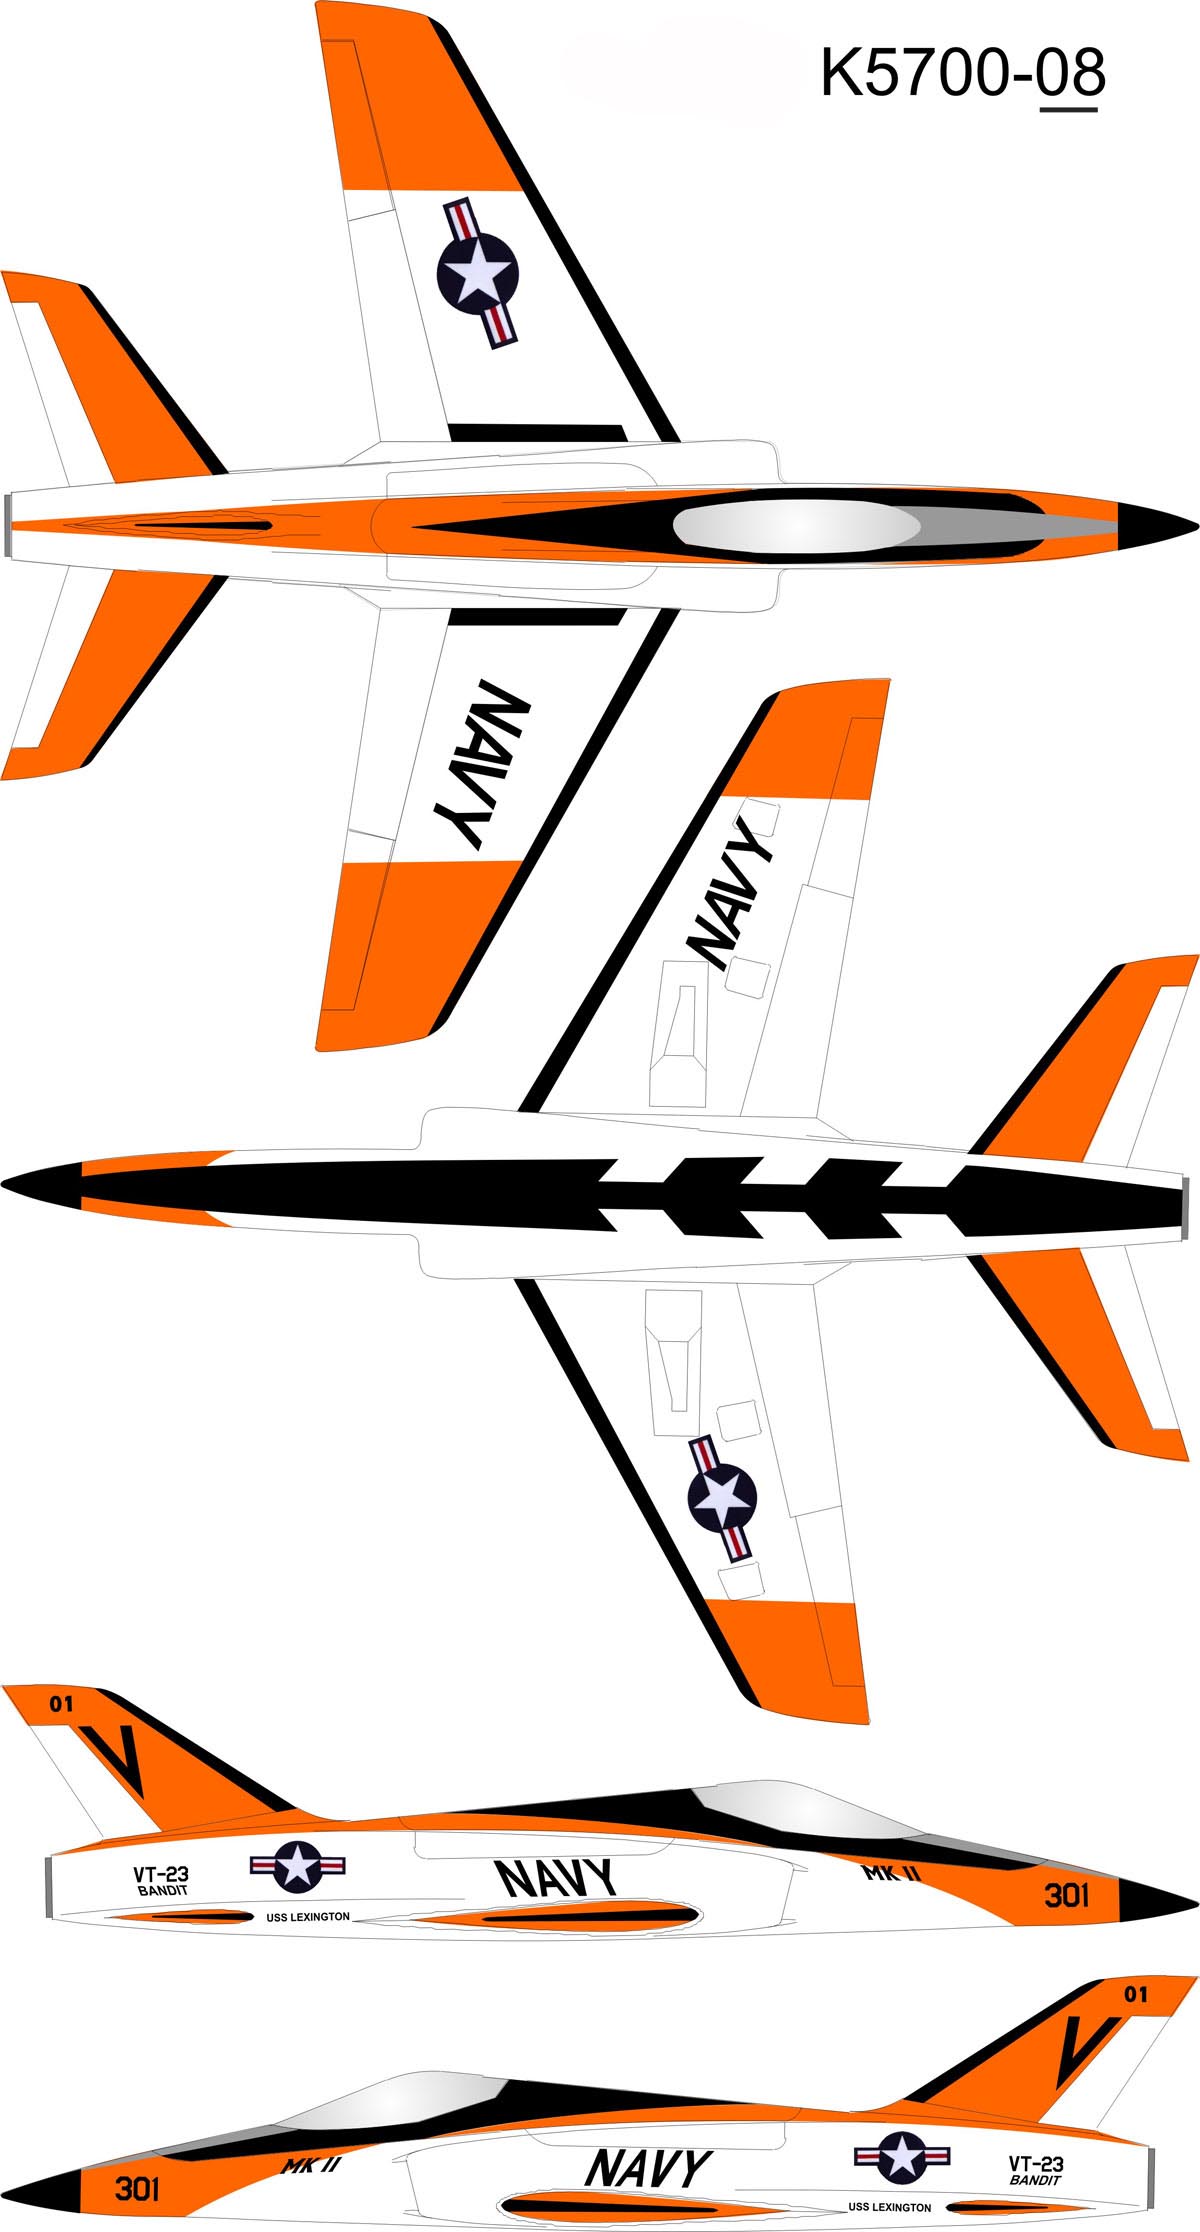 Bandit Mk II BVM Jets